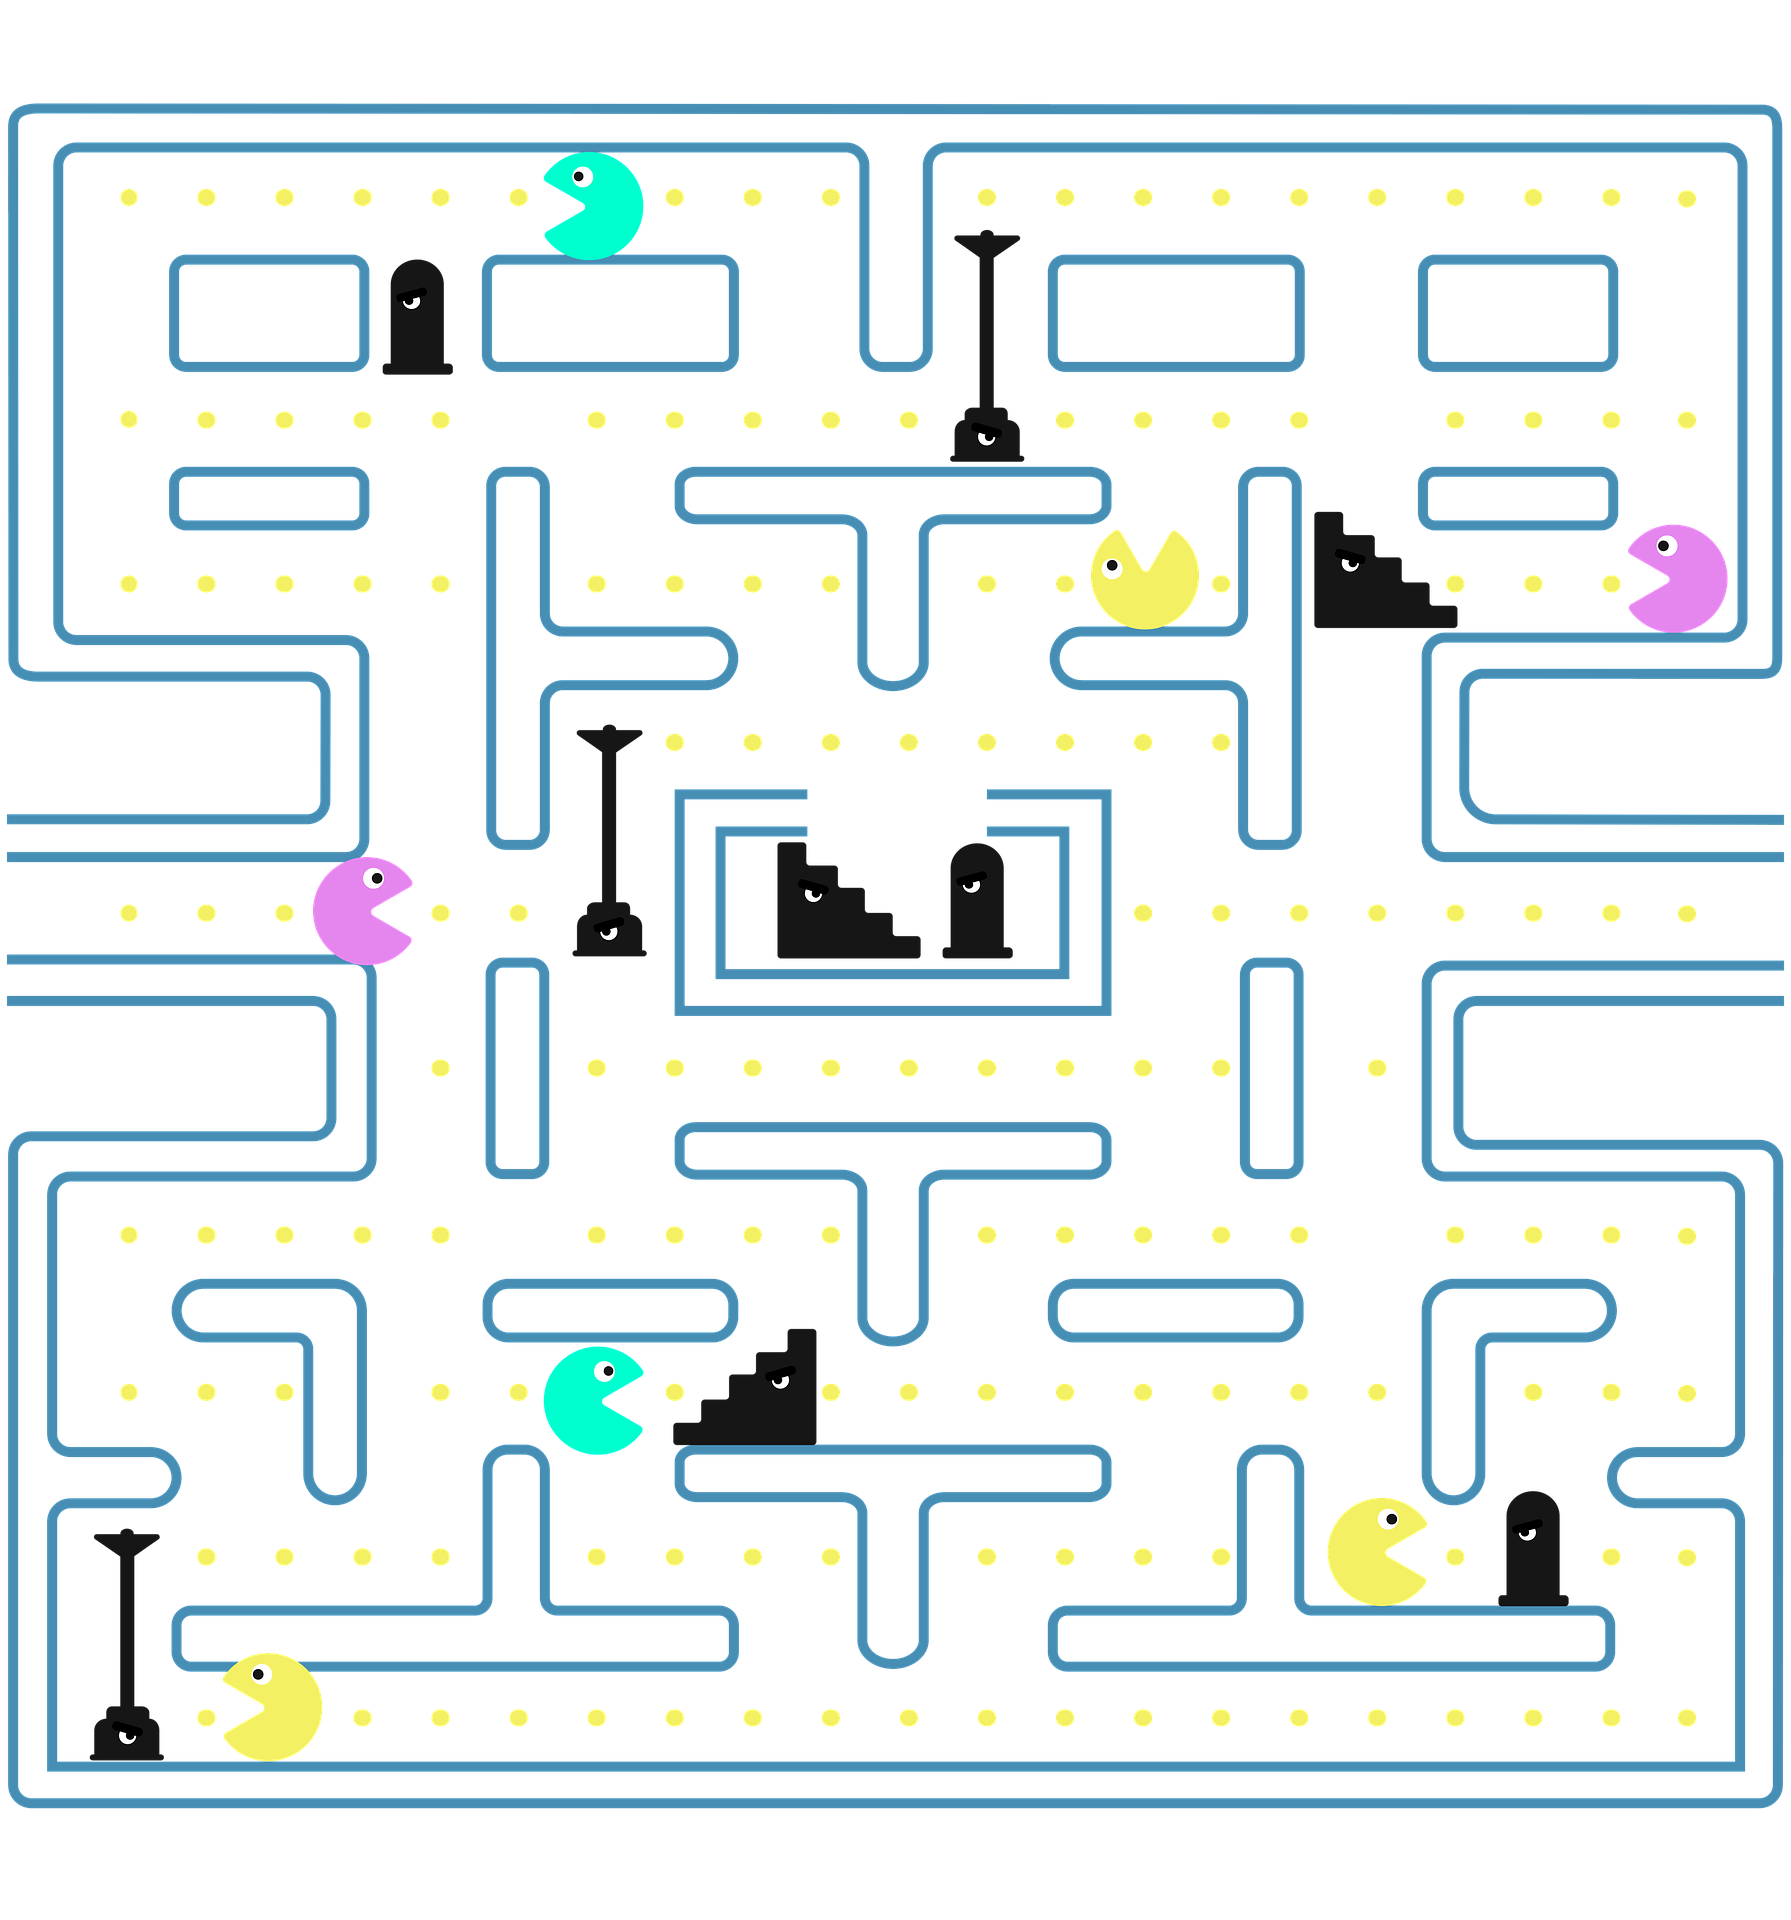 Pacman game image